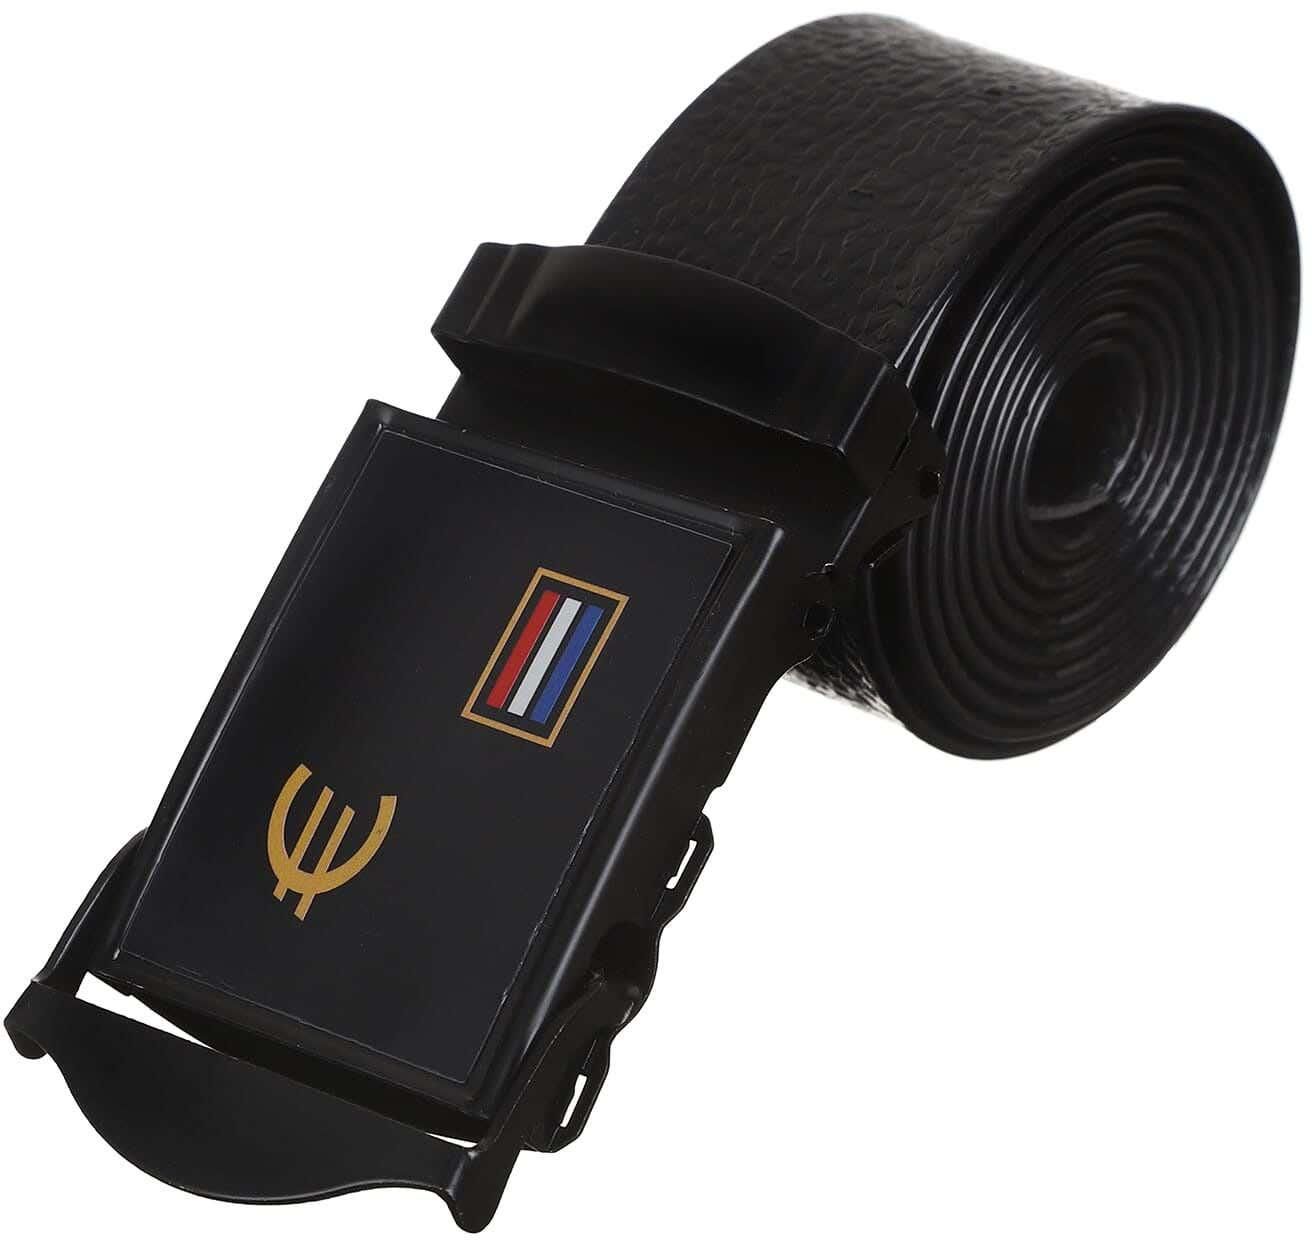 Get Men'S Leather Belt, 115 cm - Black with best offers | Raneen.com